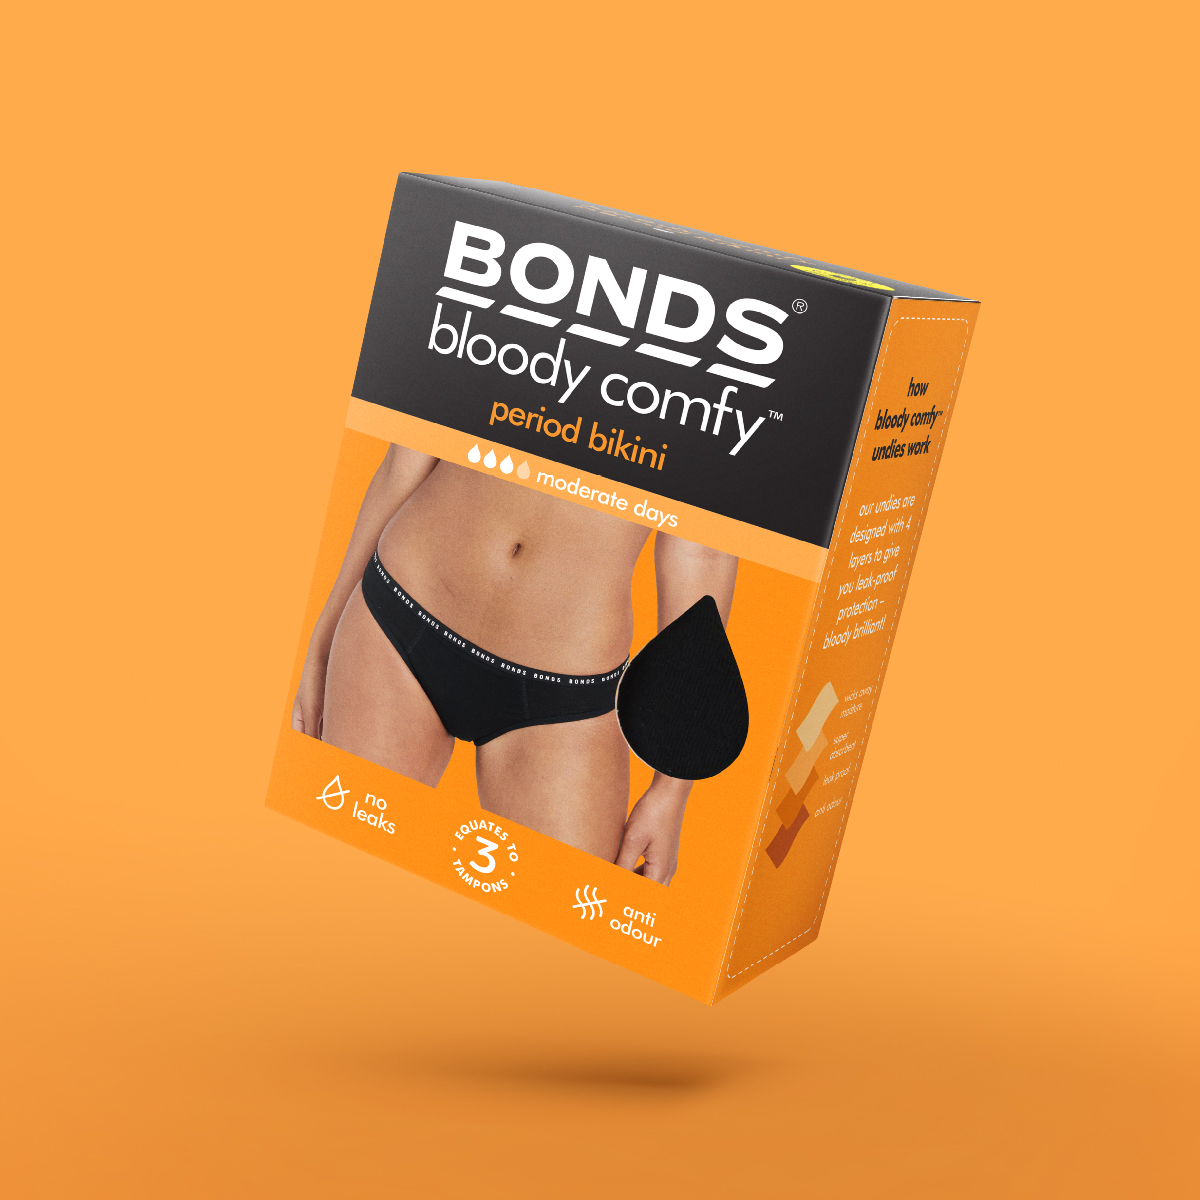 Bonds Underwear Bloody Comfy Packaging Design FMCG